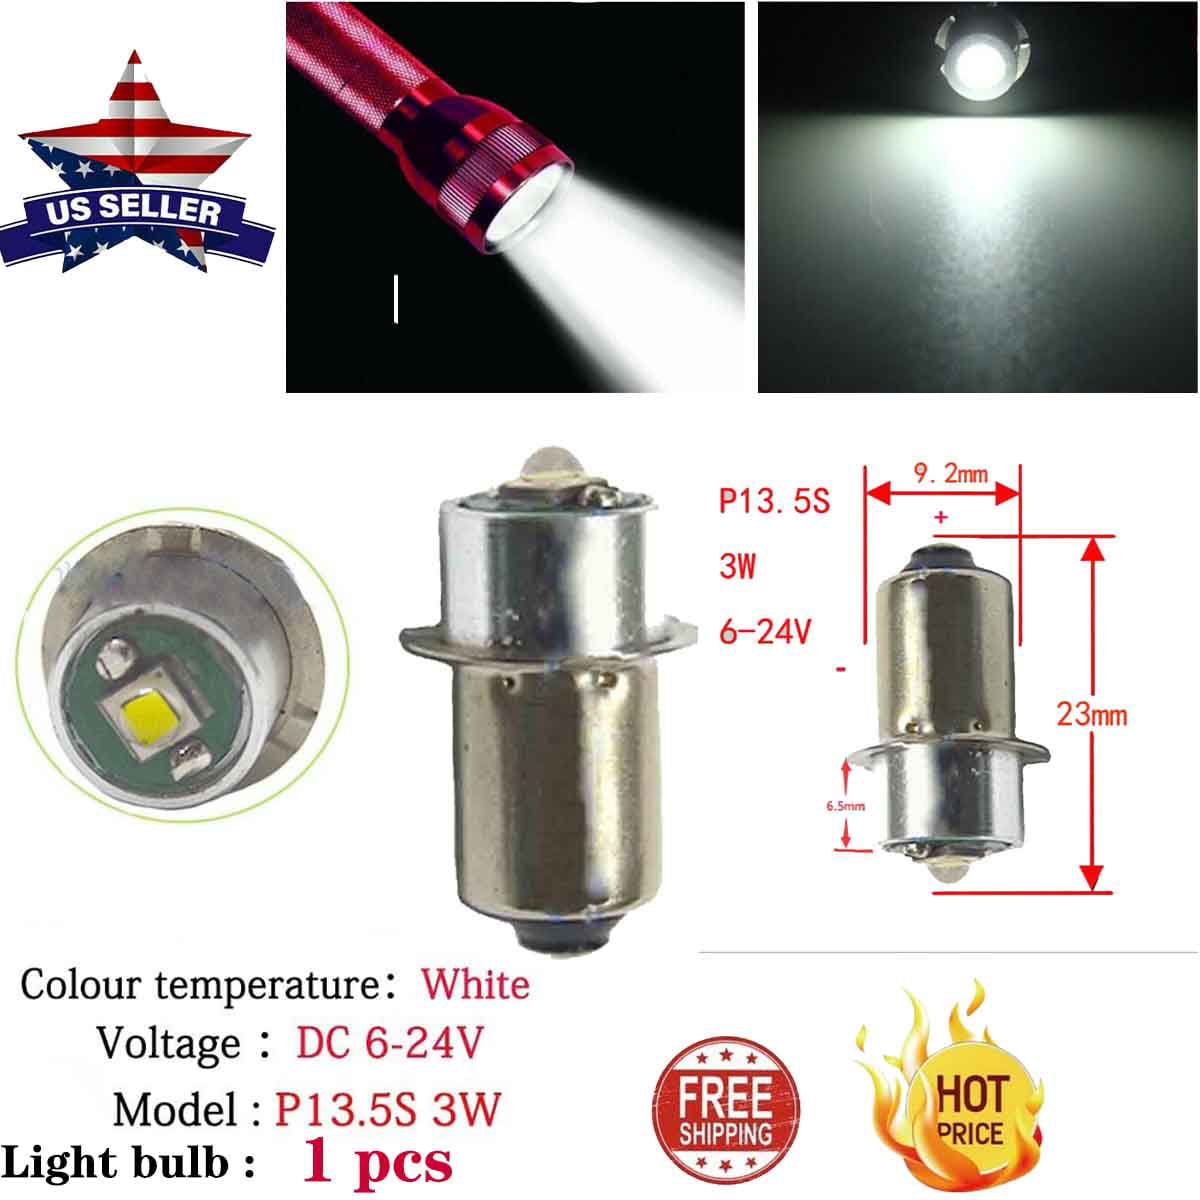 RYOBI ONE DeWalt Makita Craftsman 18V LED Replacement Bulb 1W or 5W p13.5s NEW 